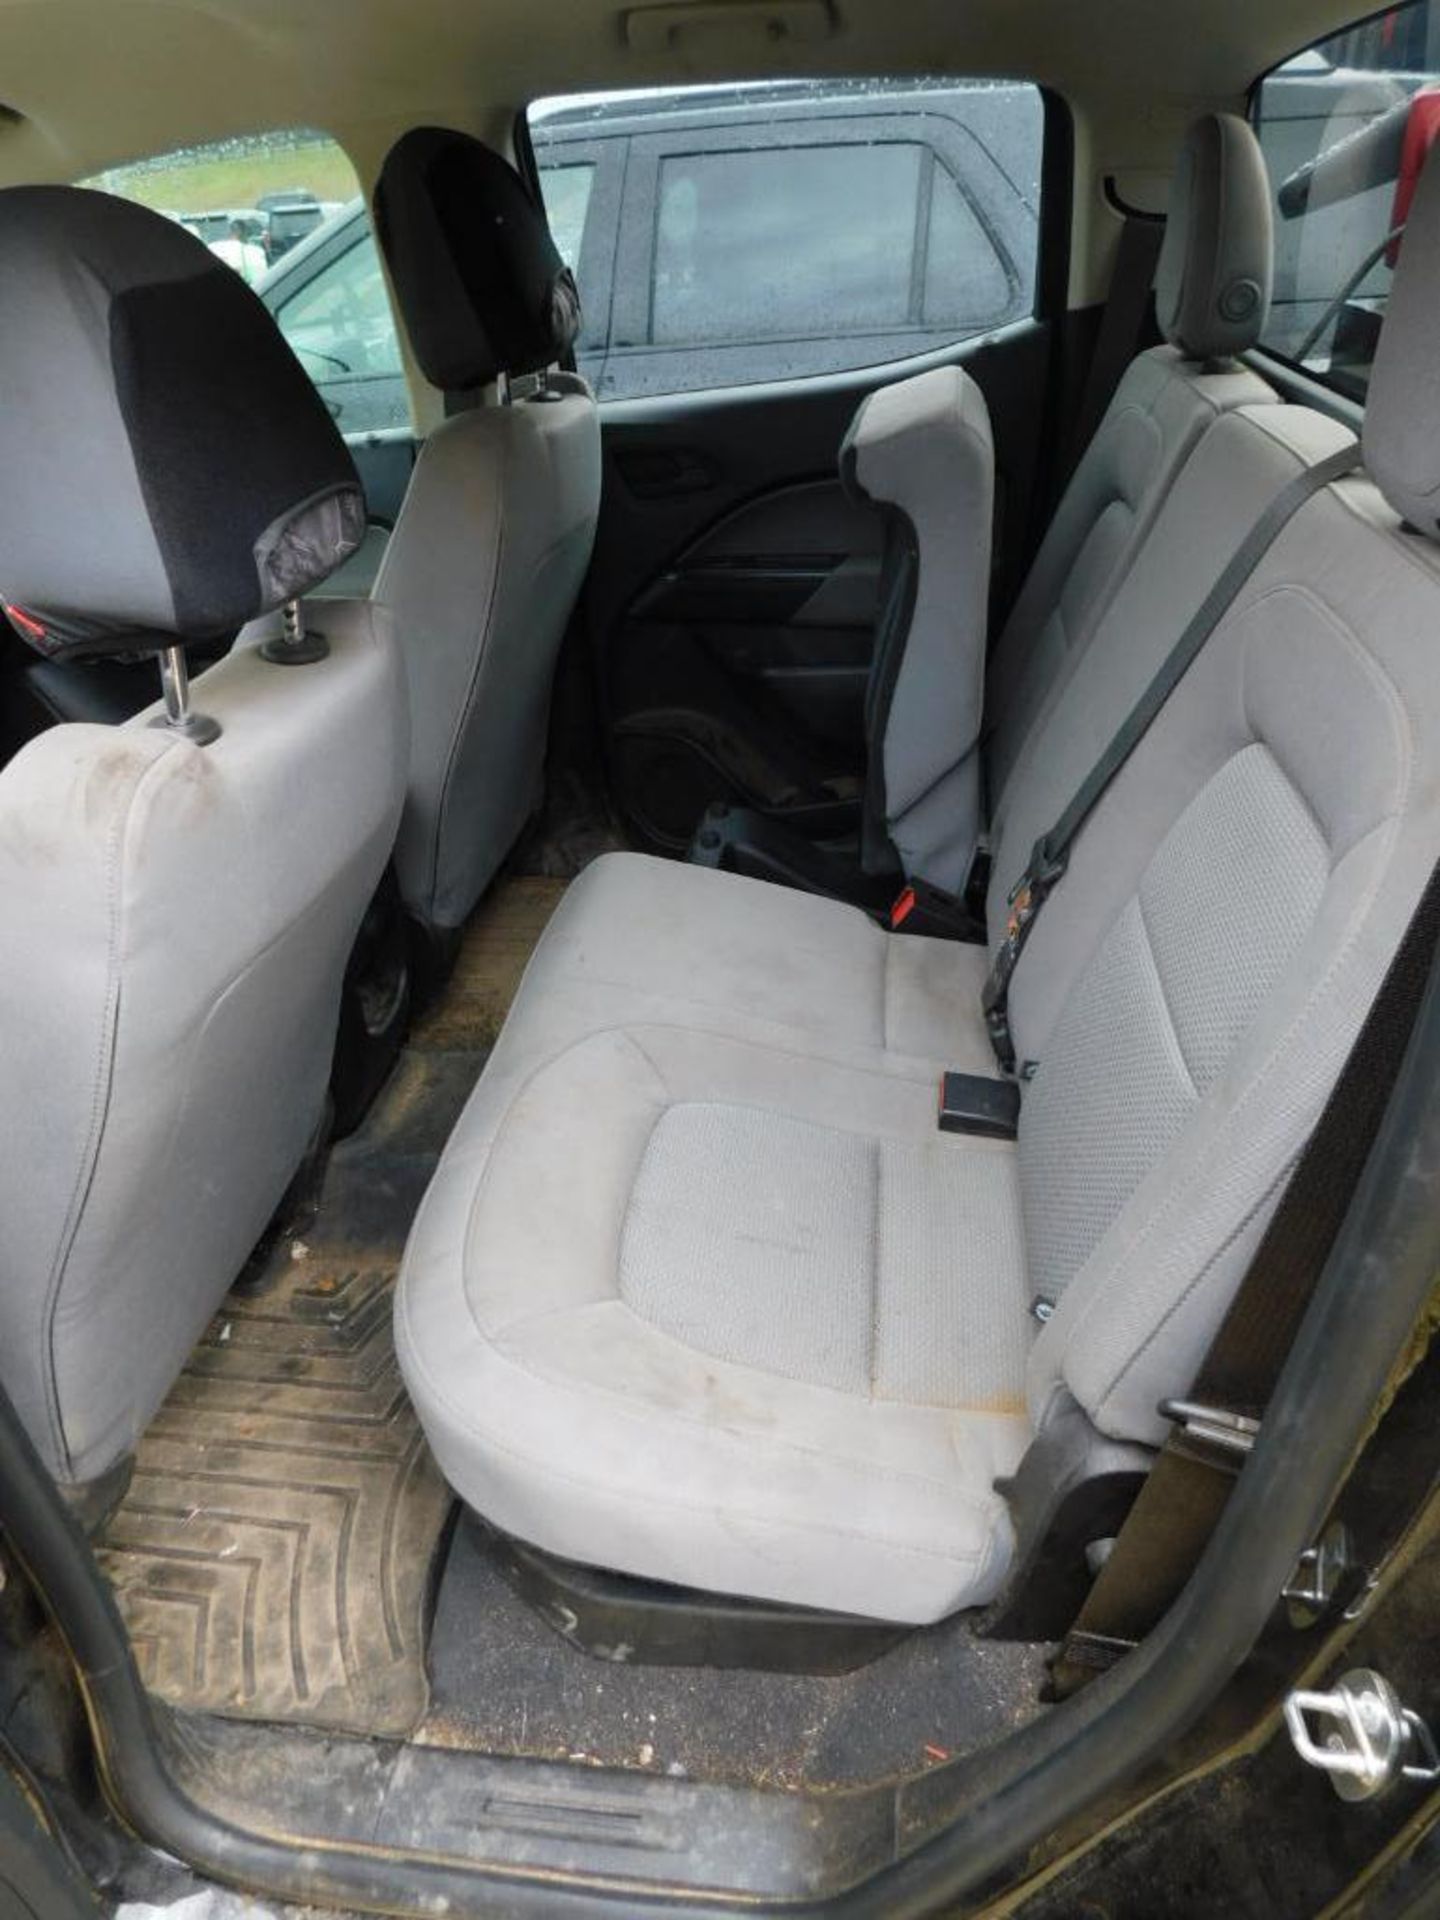 2019 Chevy Colorado Crew Cab, 4-Wheel Drive, 3.6 Liter, V6, Gasoline, Auto, 5' Bed w/Toolbox, Fuel T - Image 8 of 8